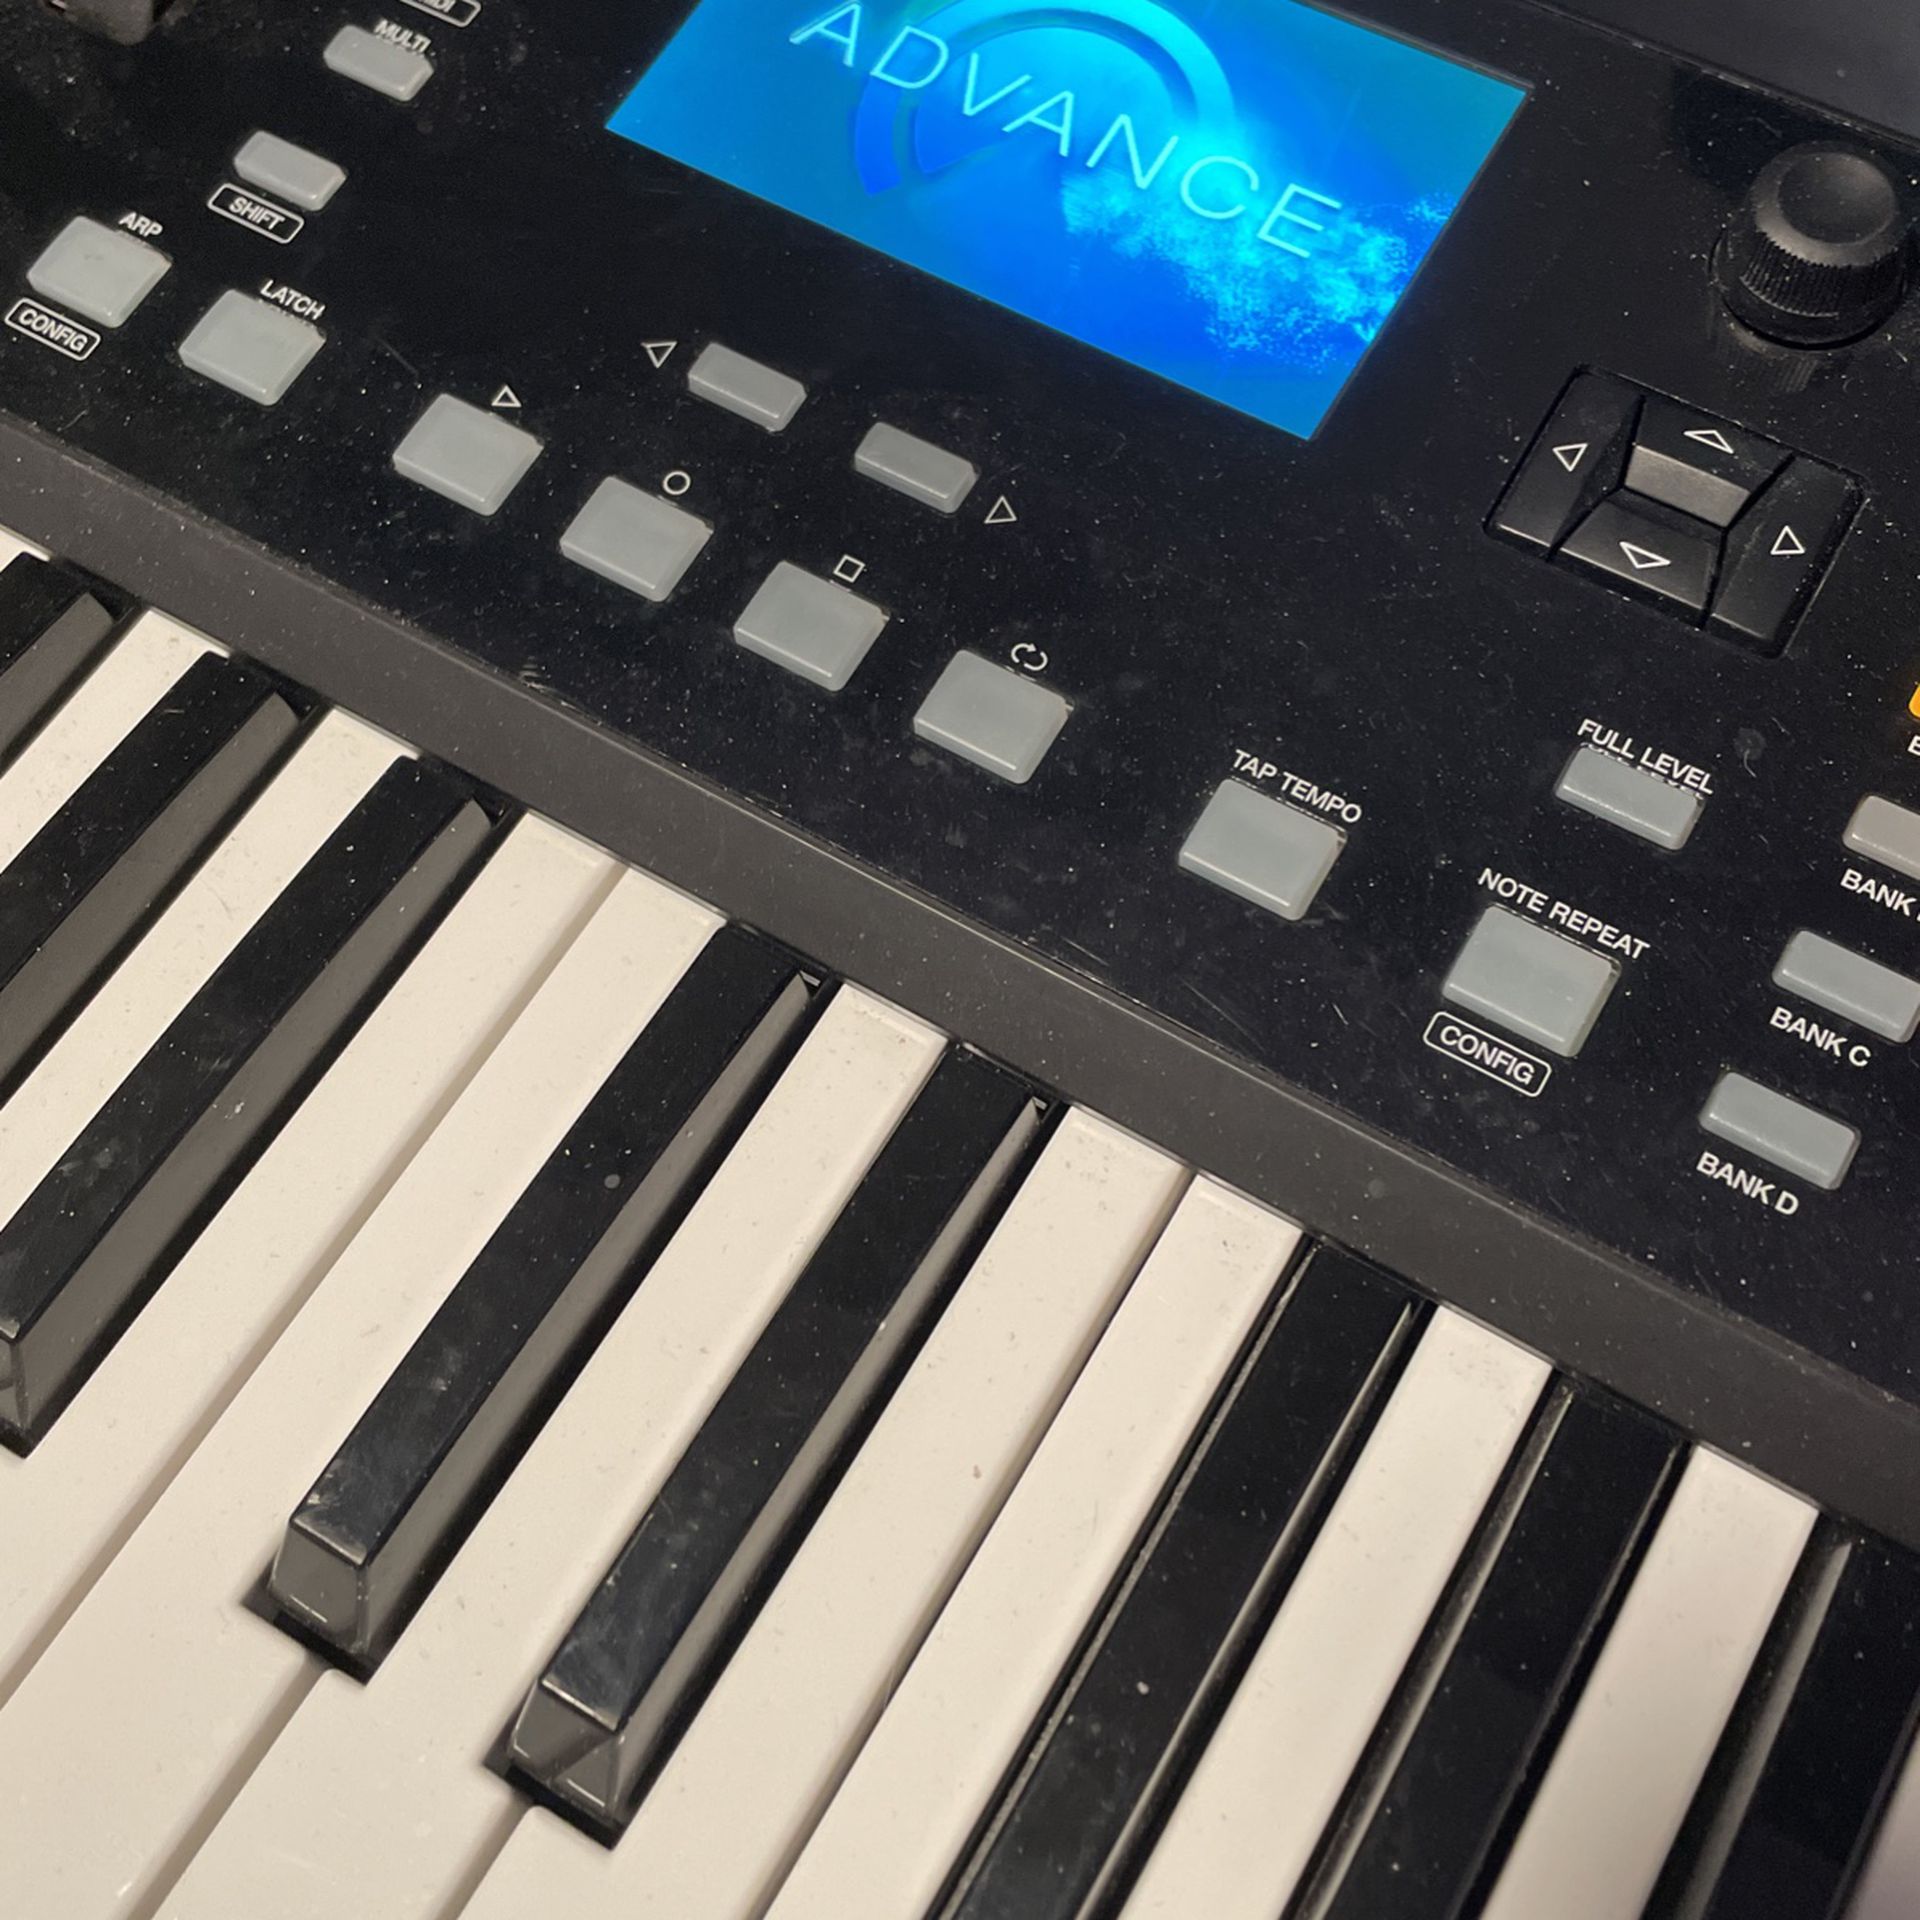 Akai Professional Advance 49 Virtual Instrument Studio Live Keyboard Controller